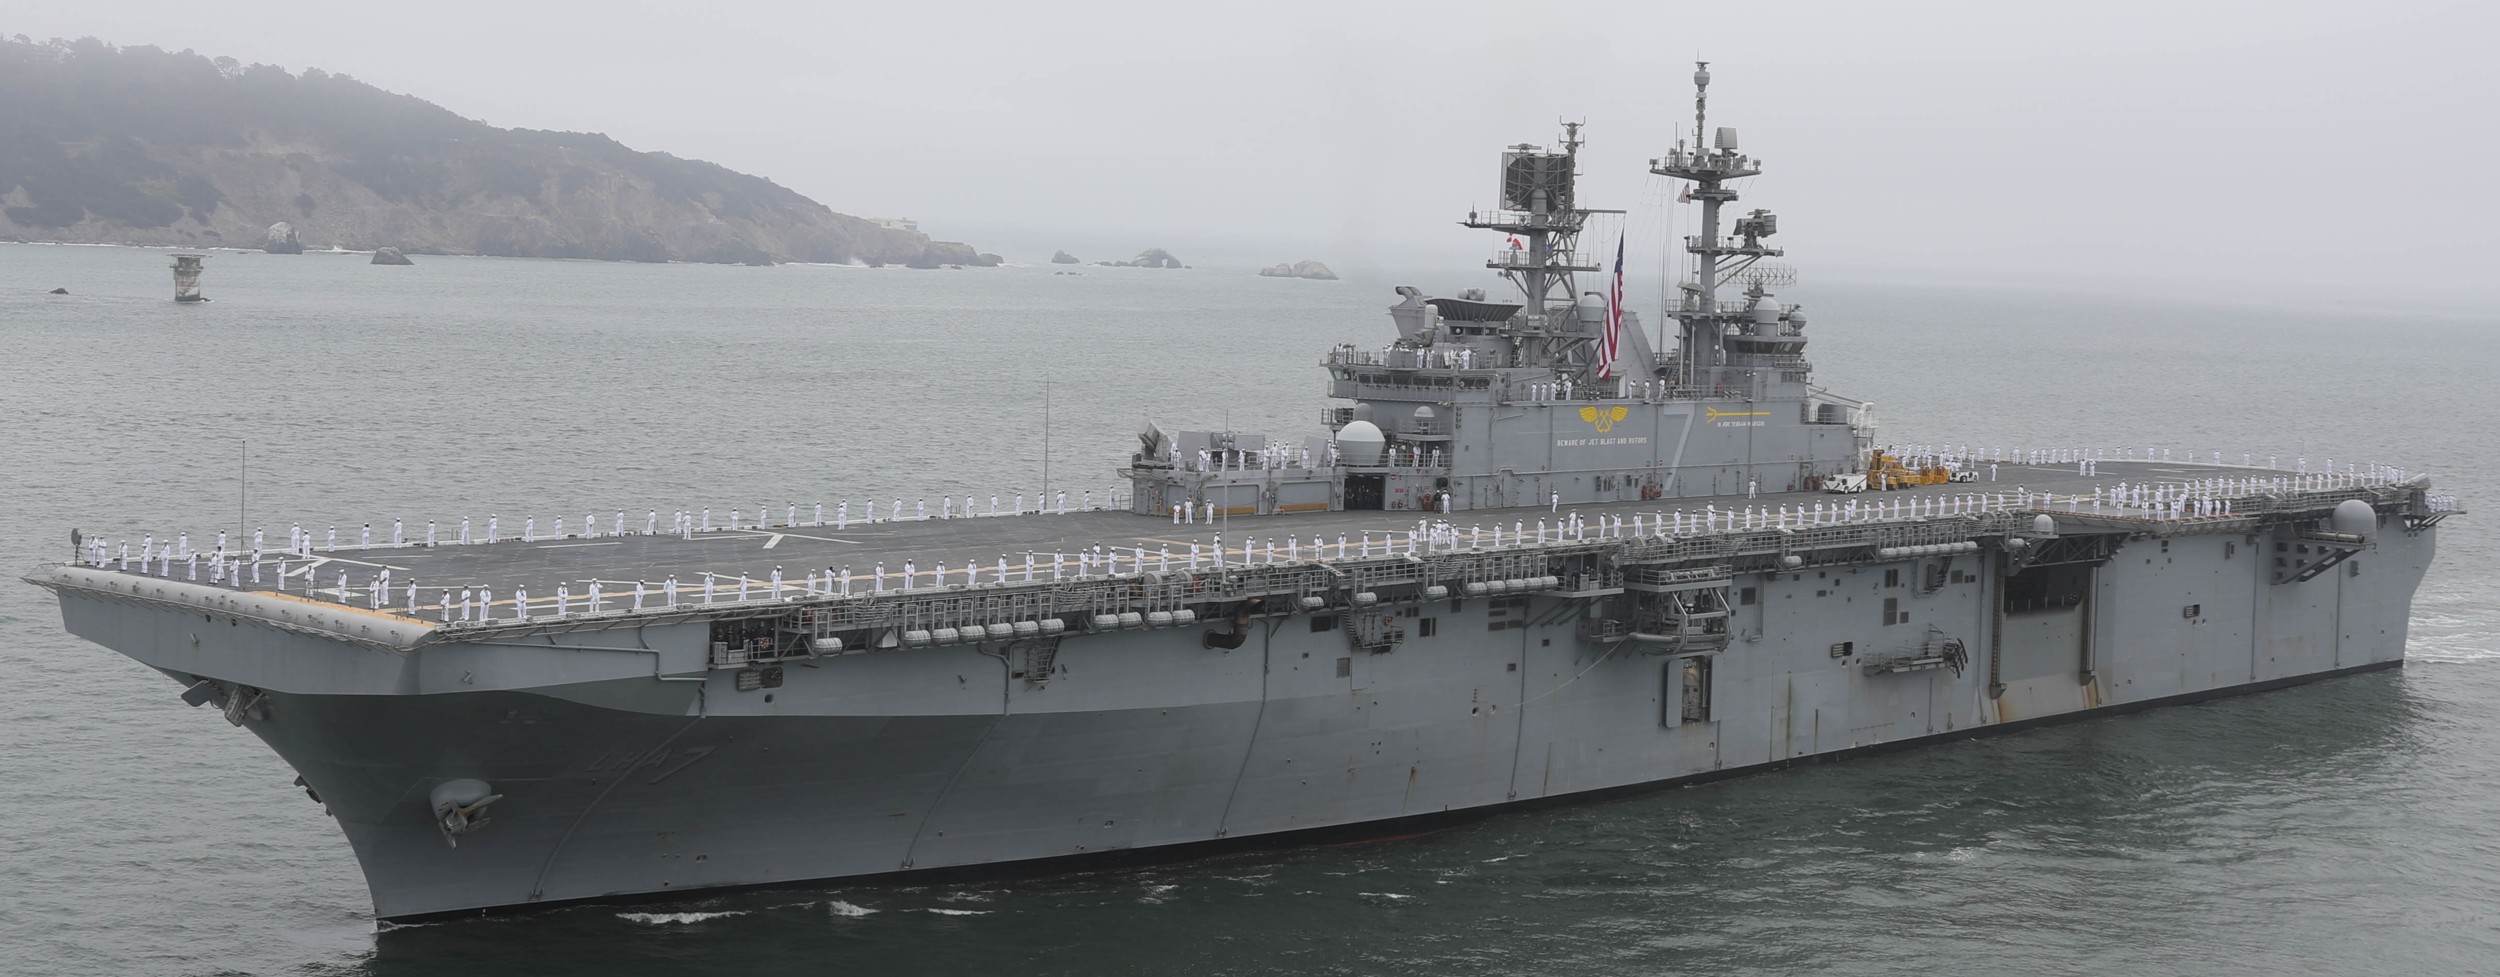 lha-7 uss tripoli america class amphibious assault ship us navy 28 san francisco fleet week